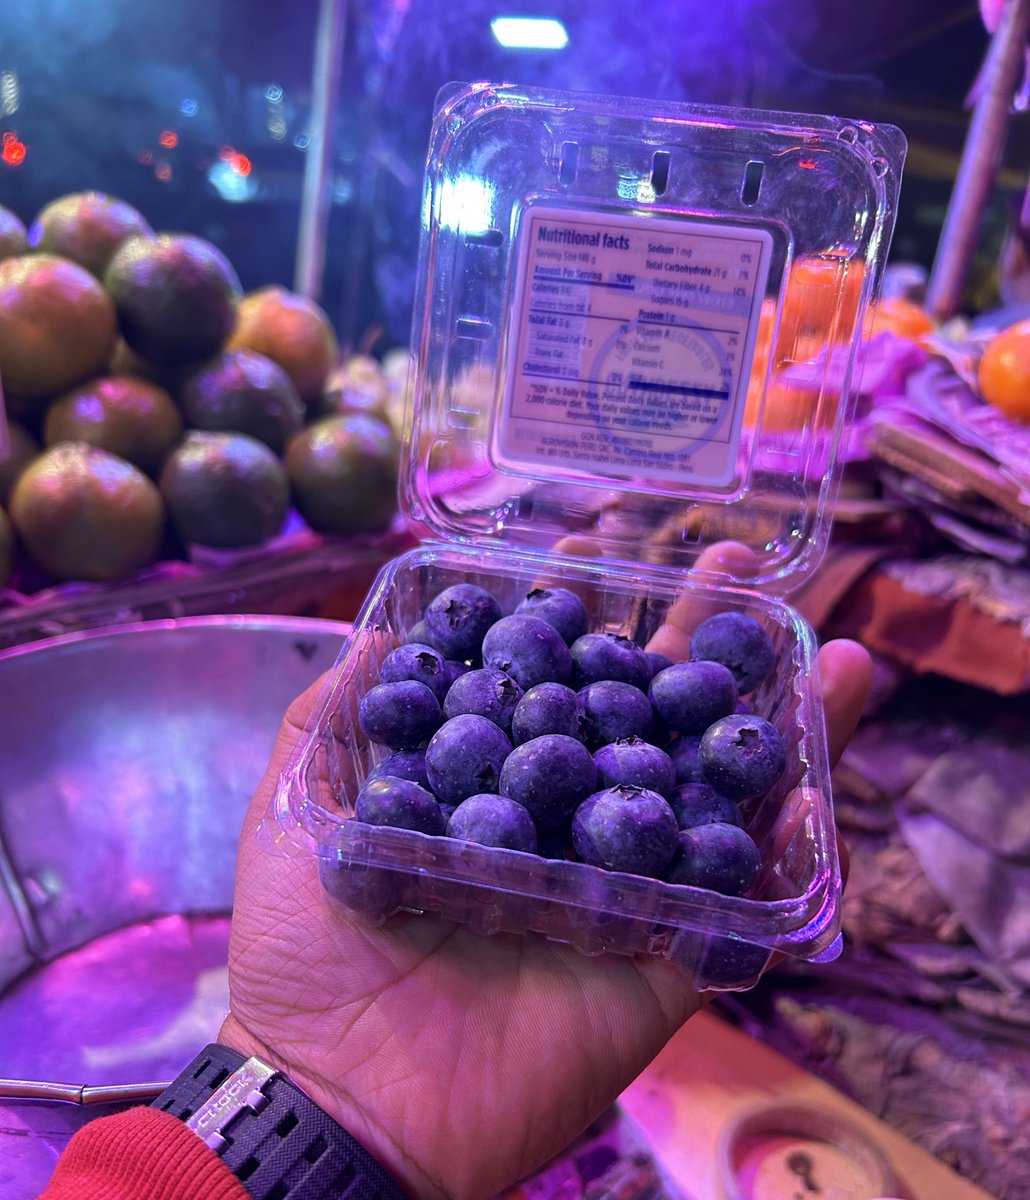 Best fresh blueberries 🫐 
Saleem ali fruits 
Contact 7042915790
Location subhash nagar mod 
Near pvr pacific mall 110027
.
#subhashnagar #saleemalifruits #blueberry #blueberries #fruit #fruitshop #allfruit #freehomedelivery #blueberryinflation #delhi #india